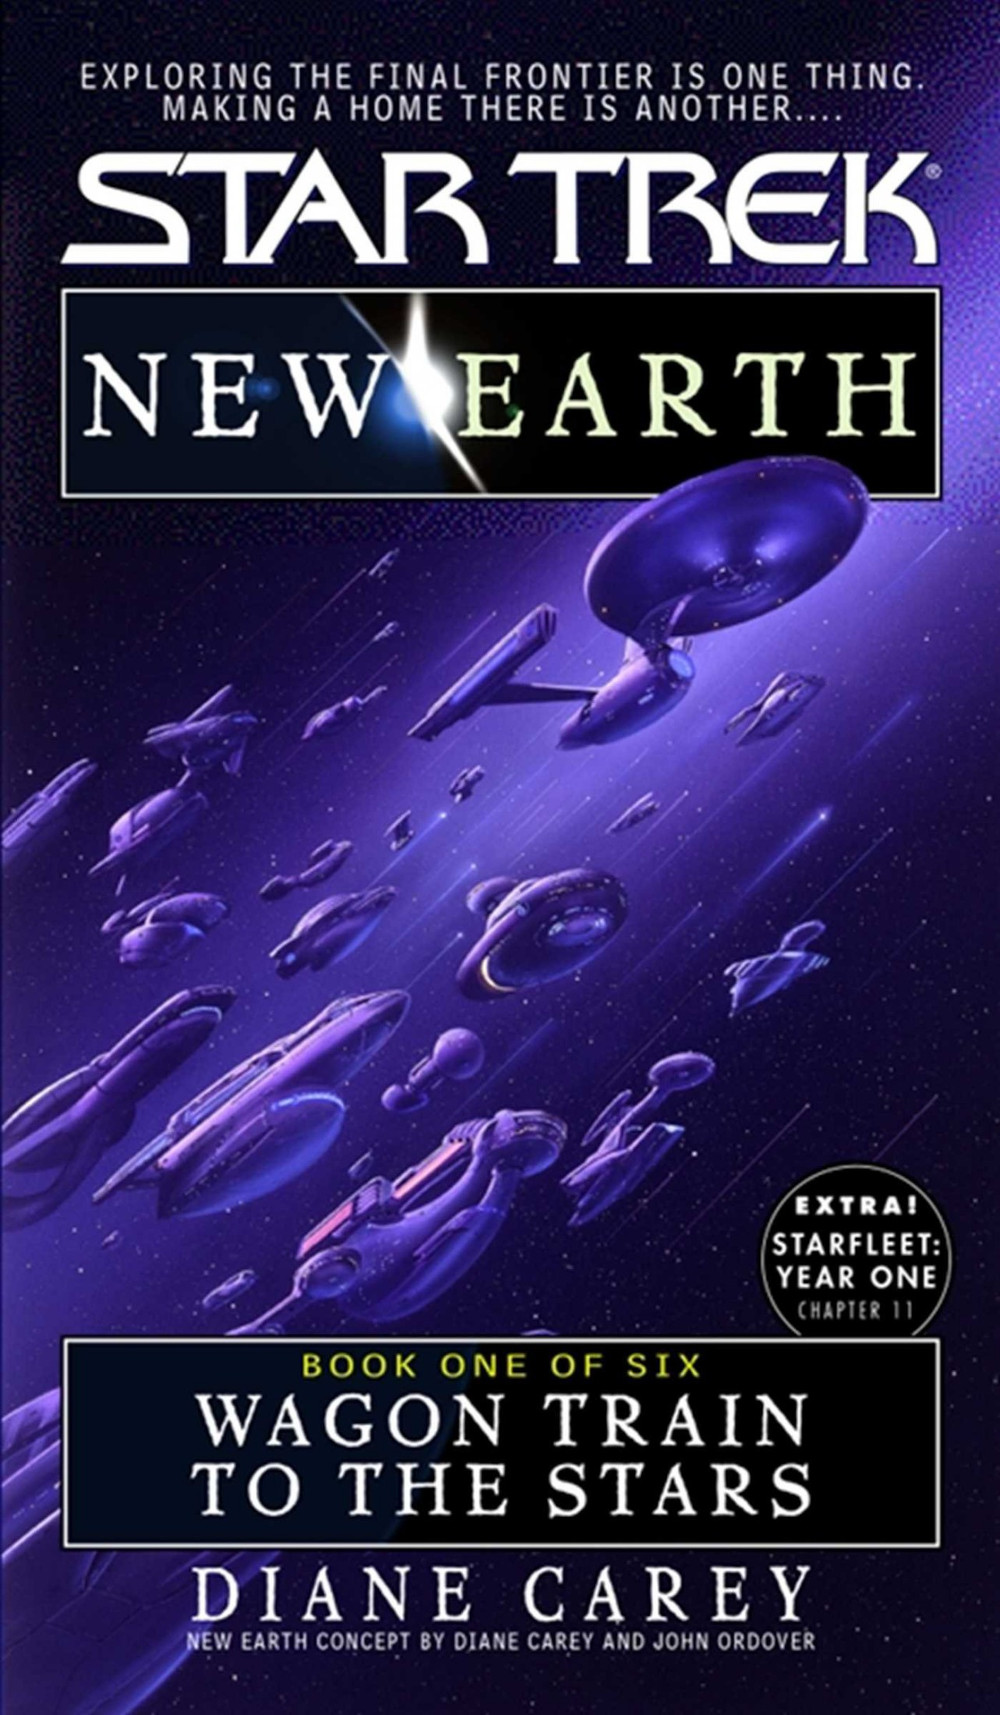 New Earth #1: Wagon Train to the Stars (Jun 2000)